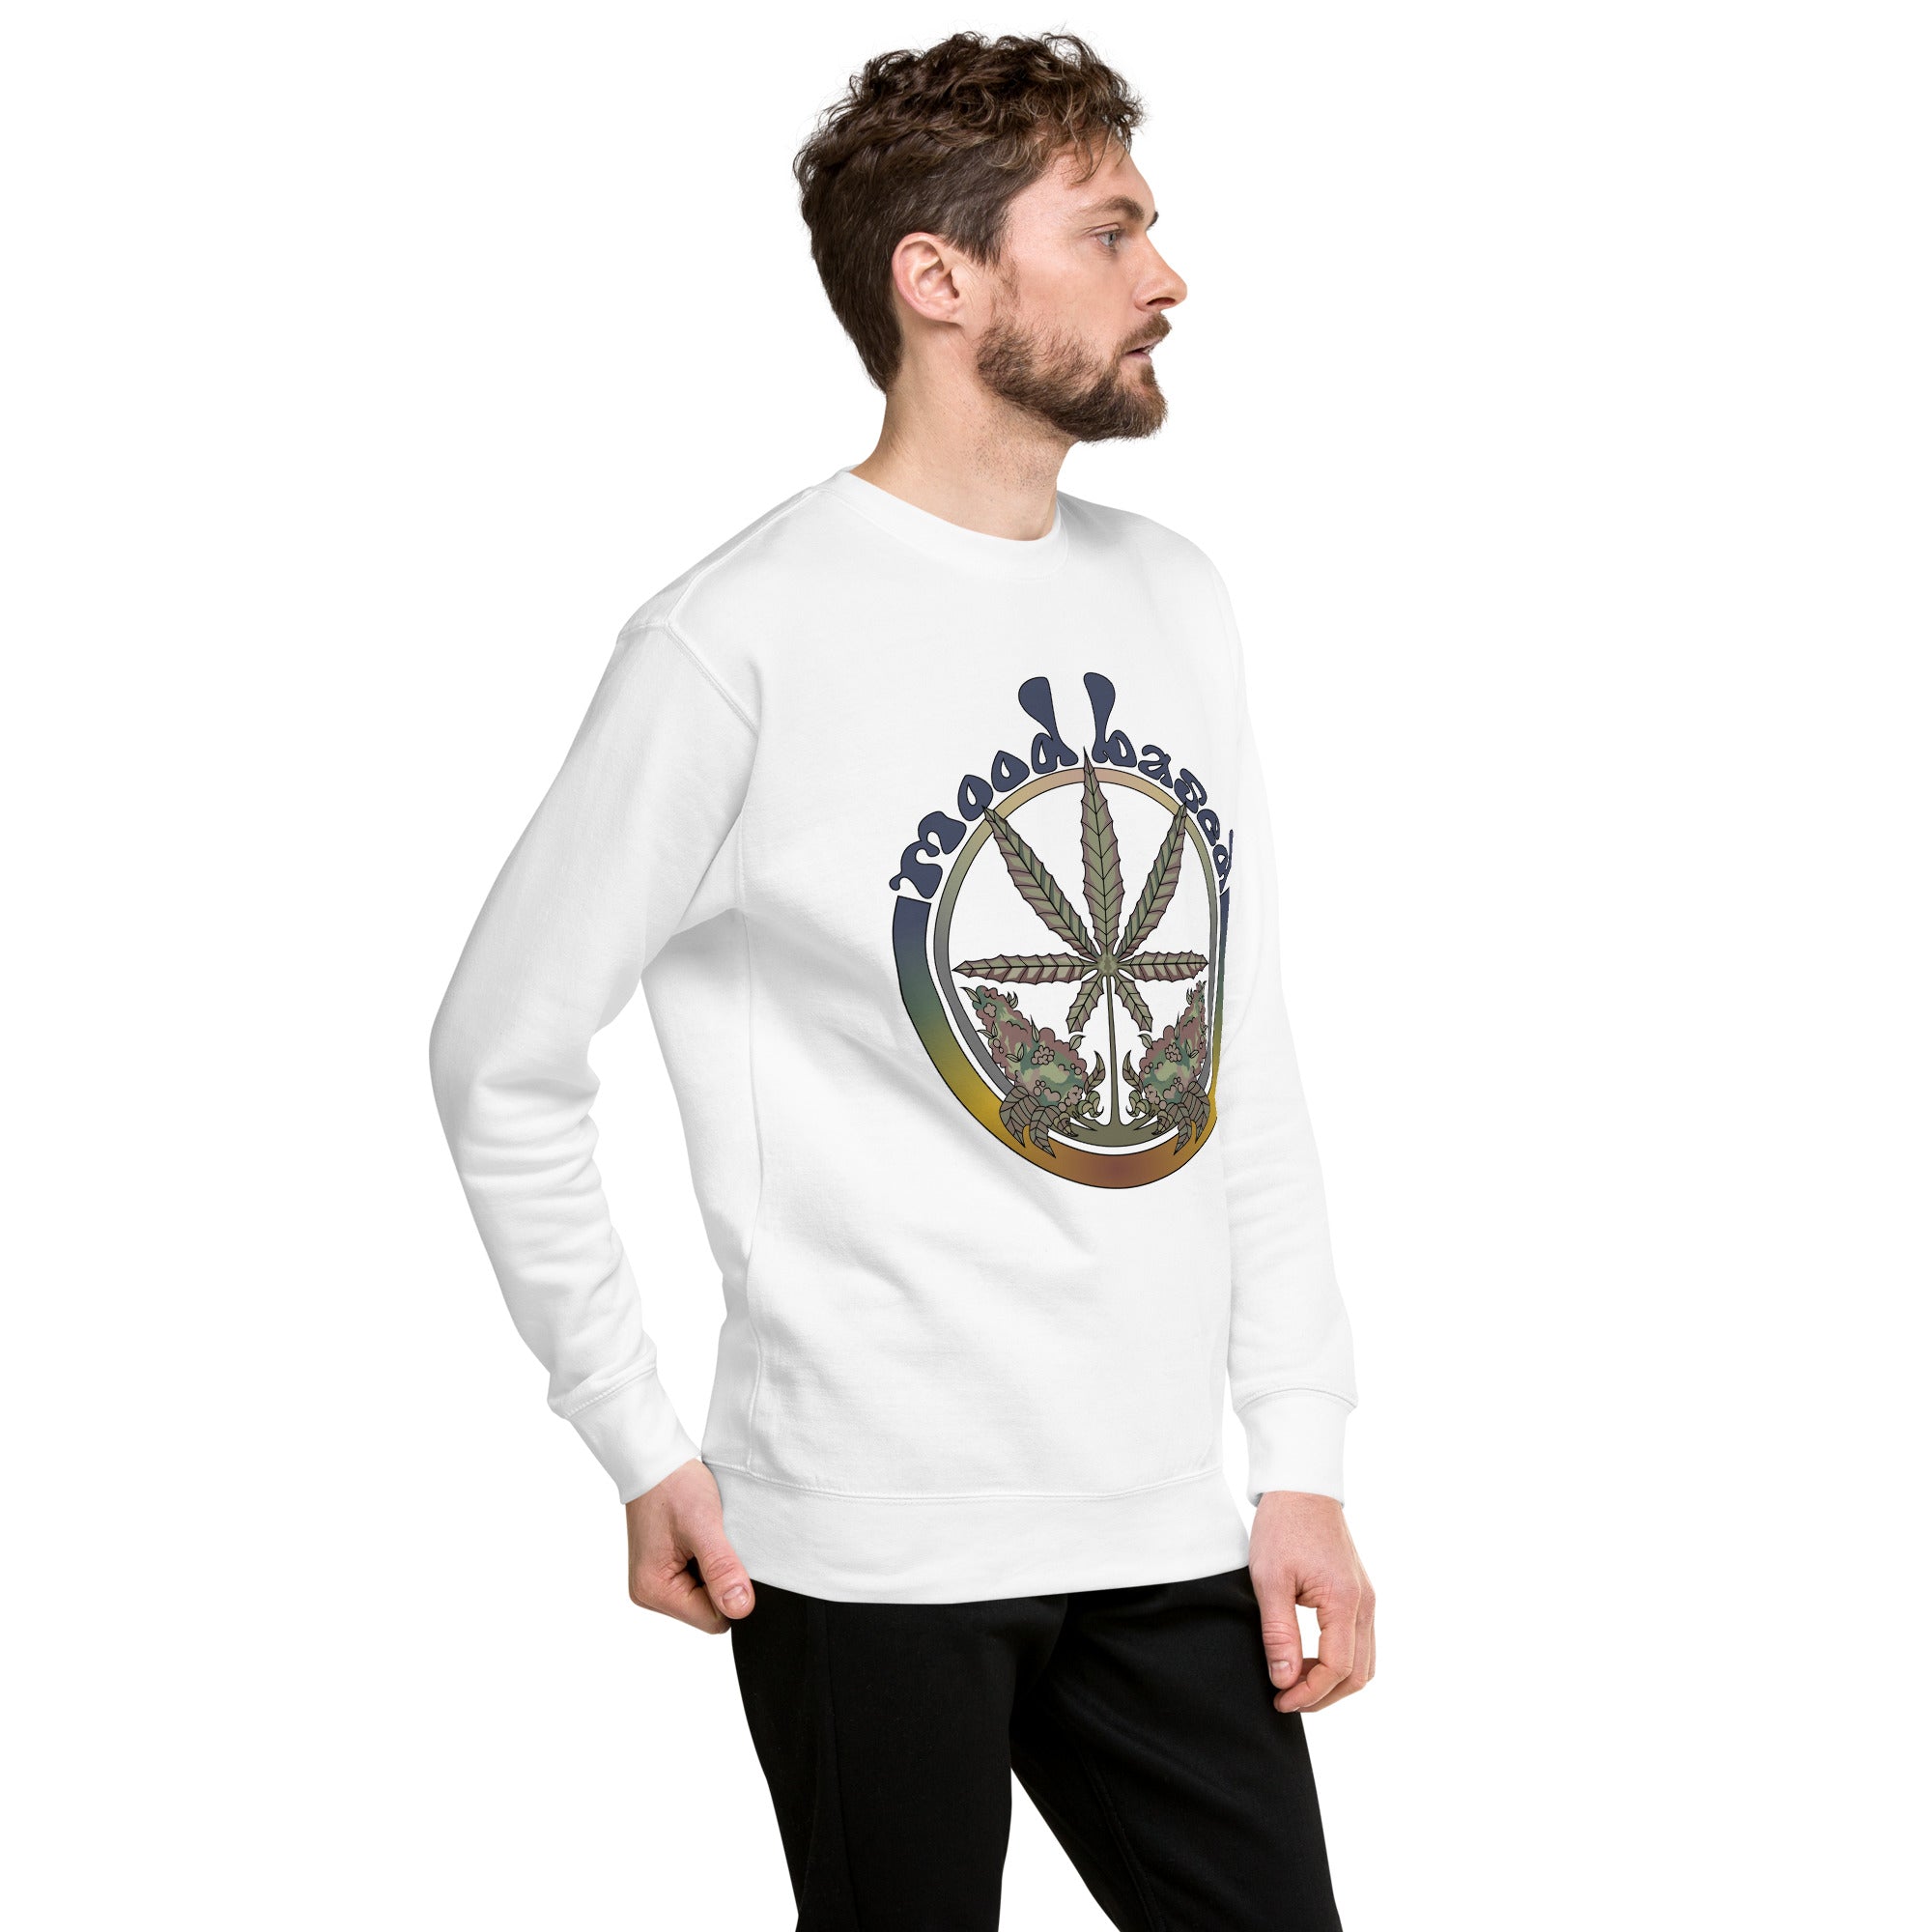 cannabis inspired Mood Based Unisex Sweatshirt - Cannamood Apparel